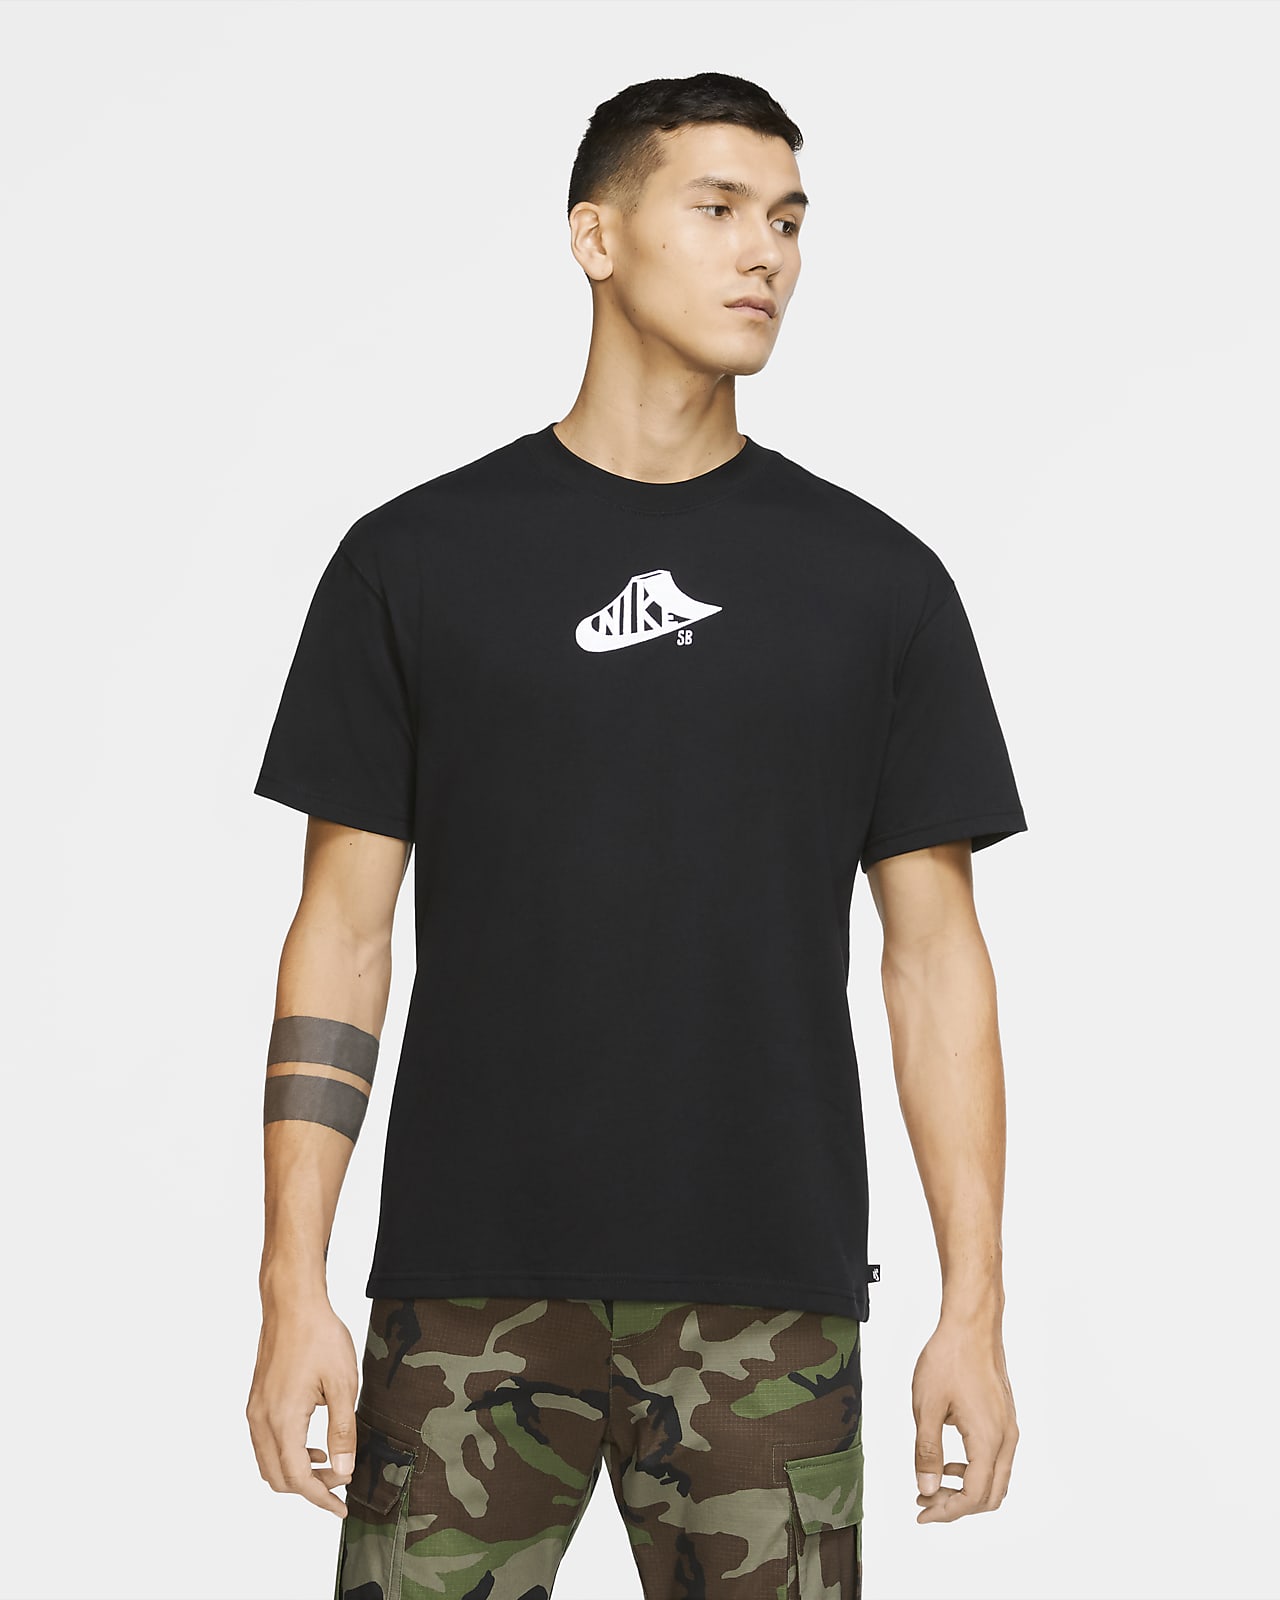 Nike SB Men's Skate T-Shirt. Nike LU